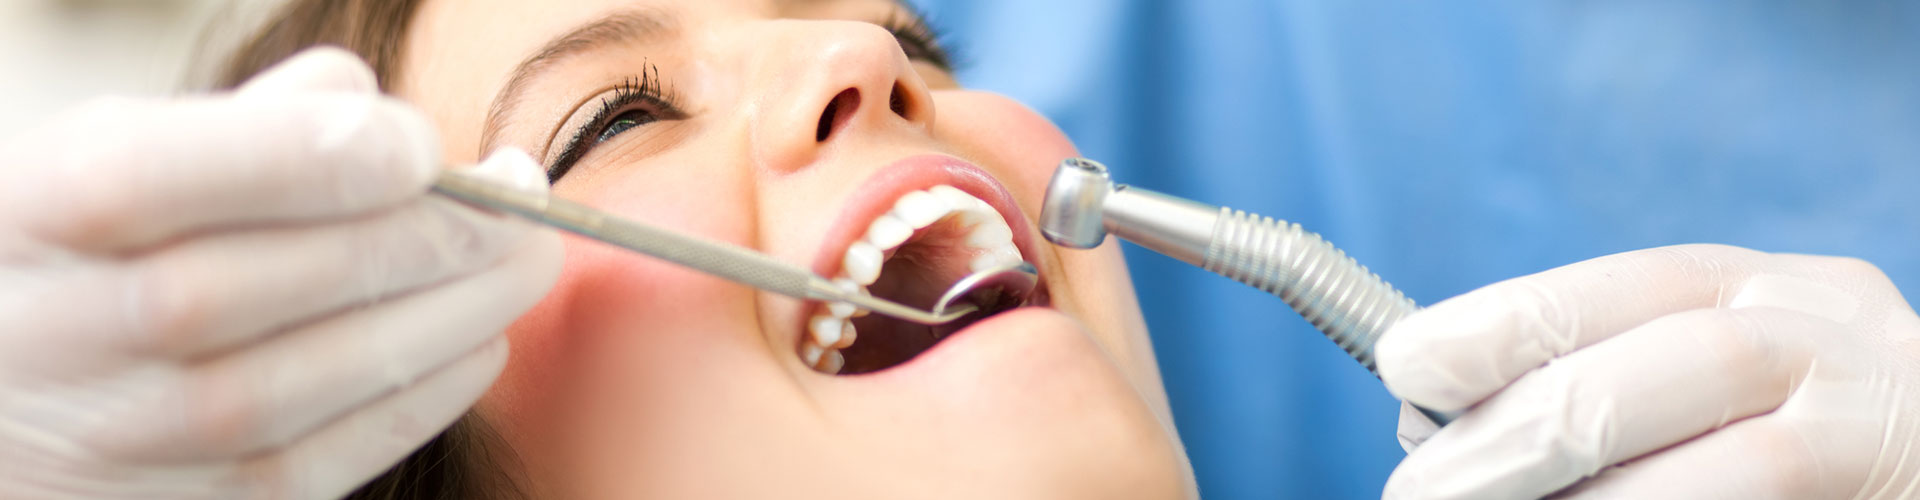 A woman having a dental exam at Bella Hanono Family Dentistry in Alpharetta, GA